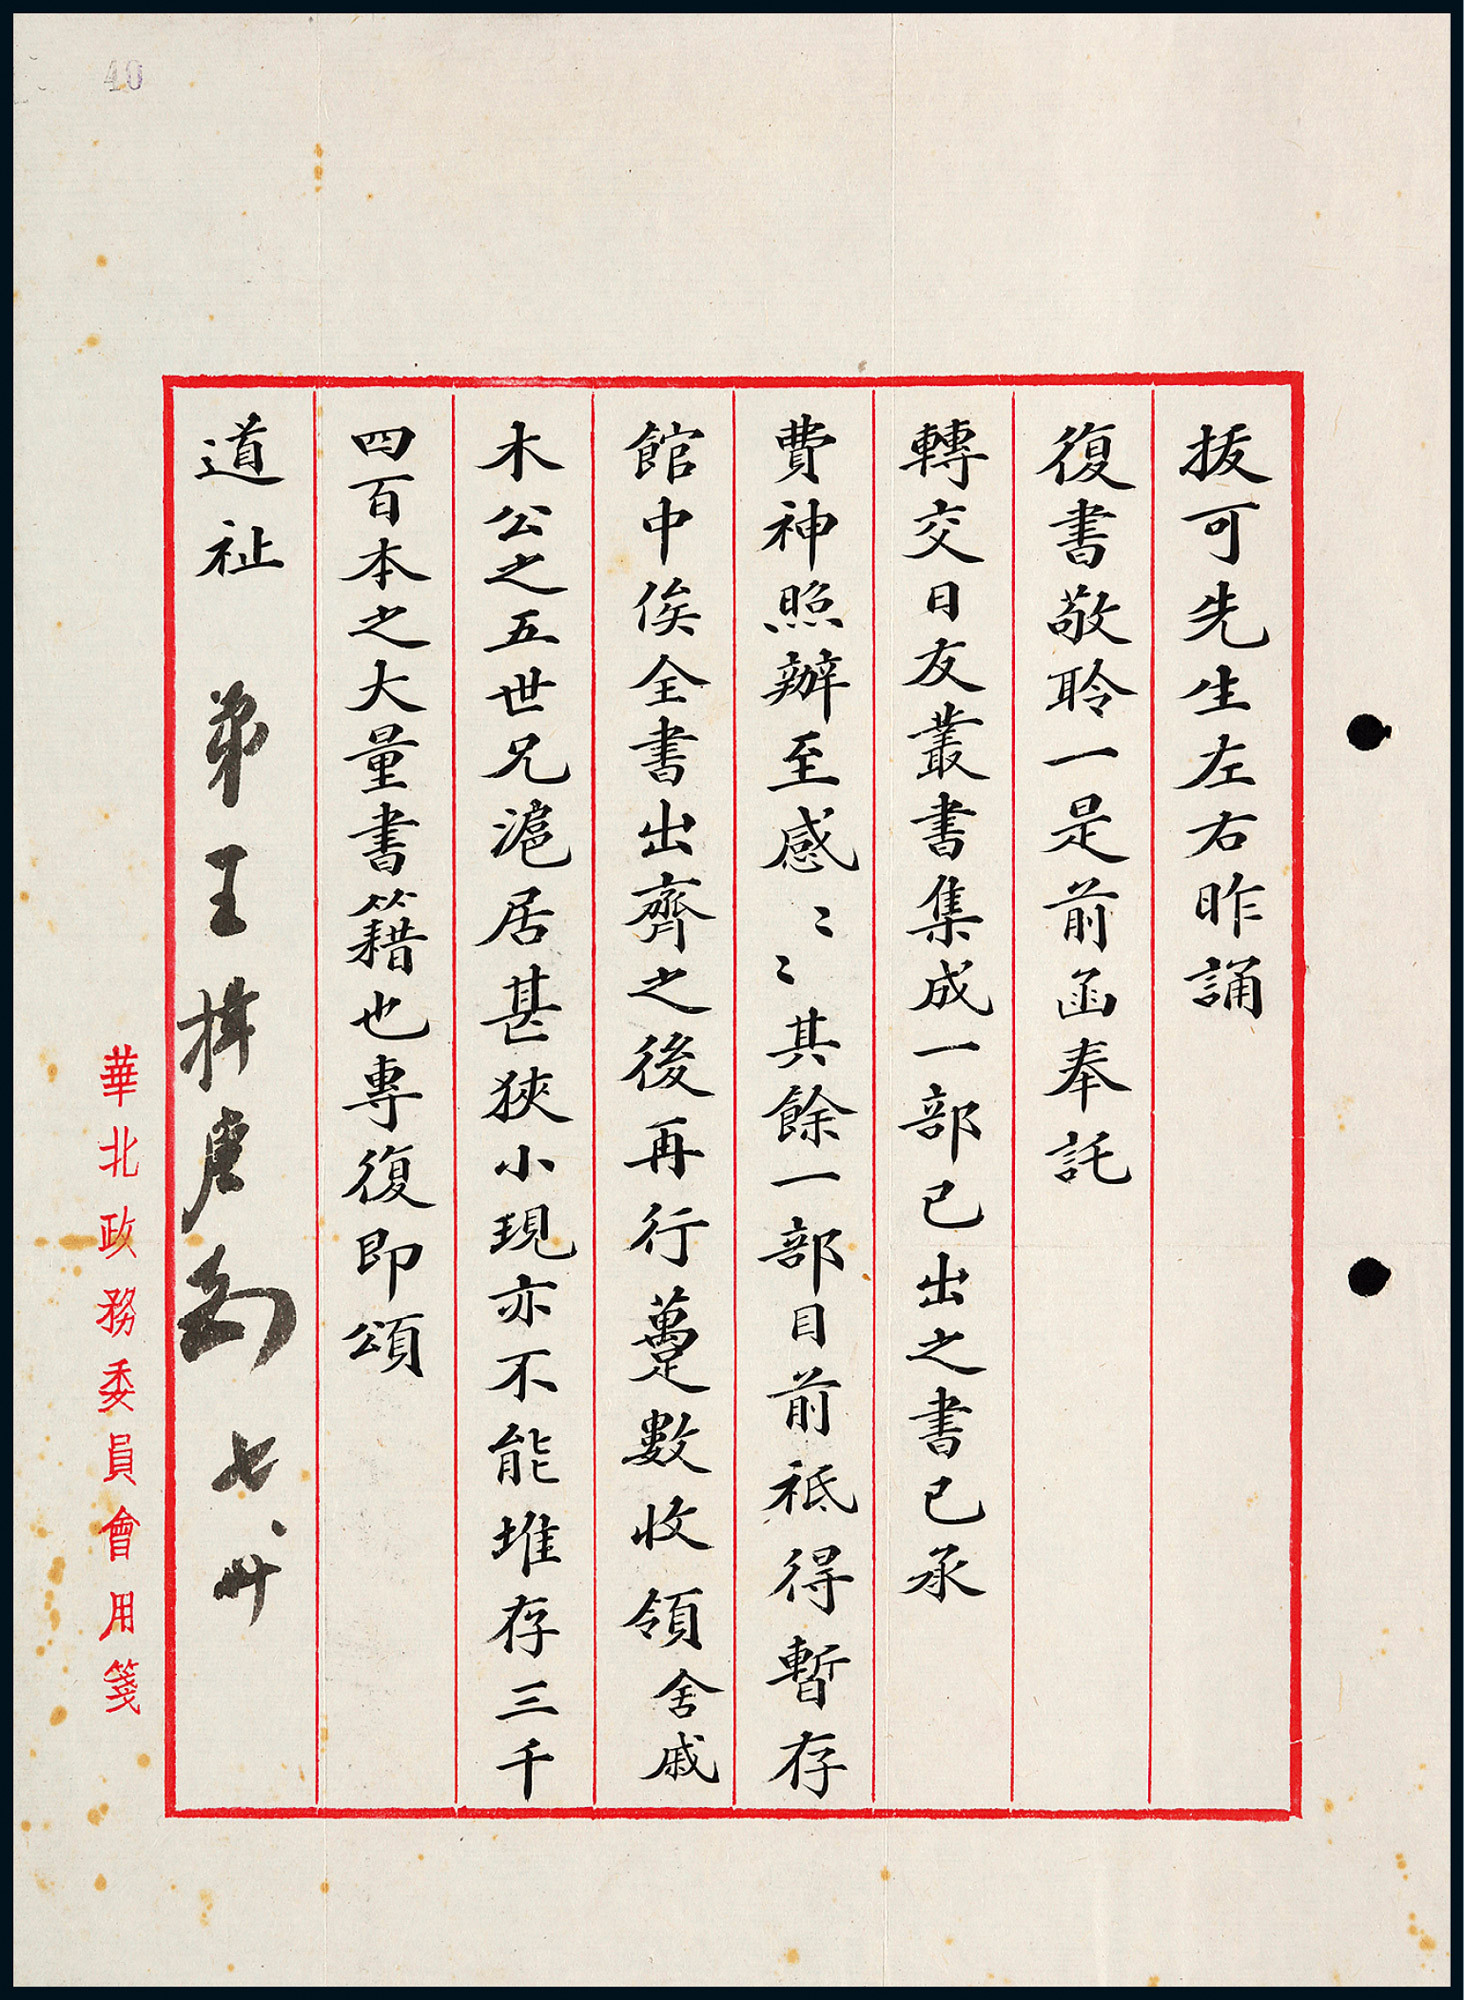 A letter from Wang Yitang to Li Bake